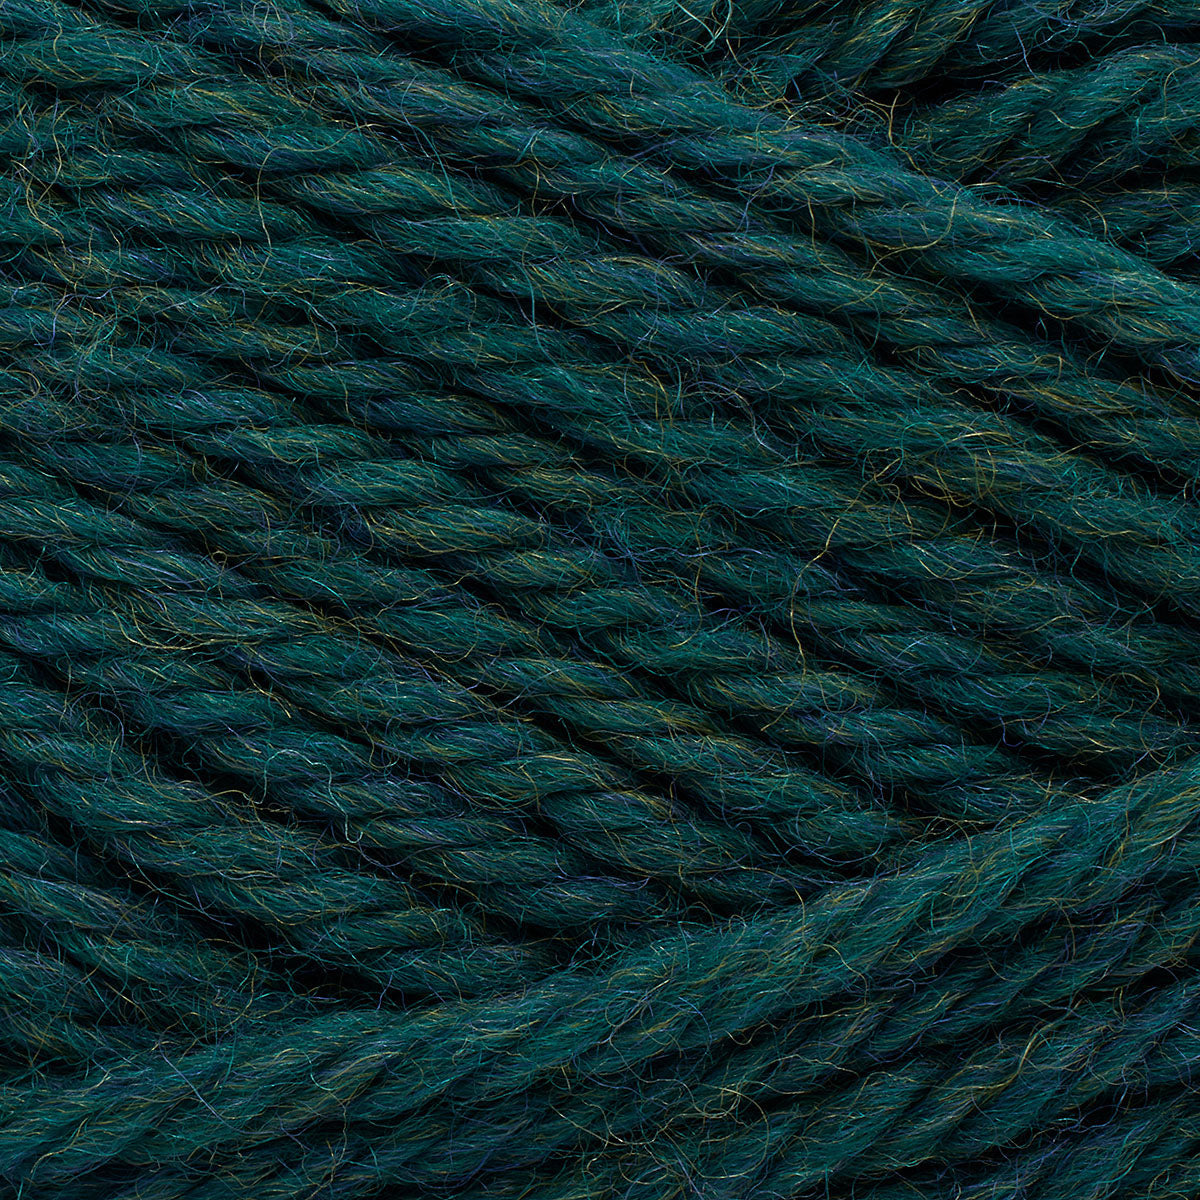 Peruvian Highland Wool sea green melange [801]